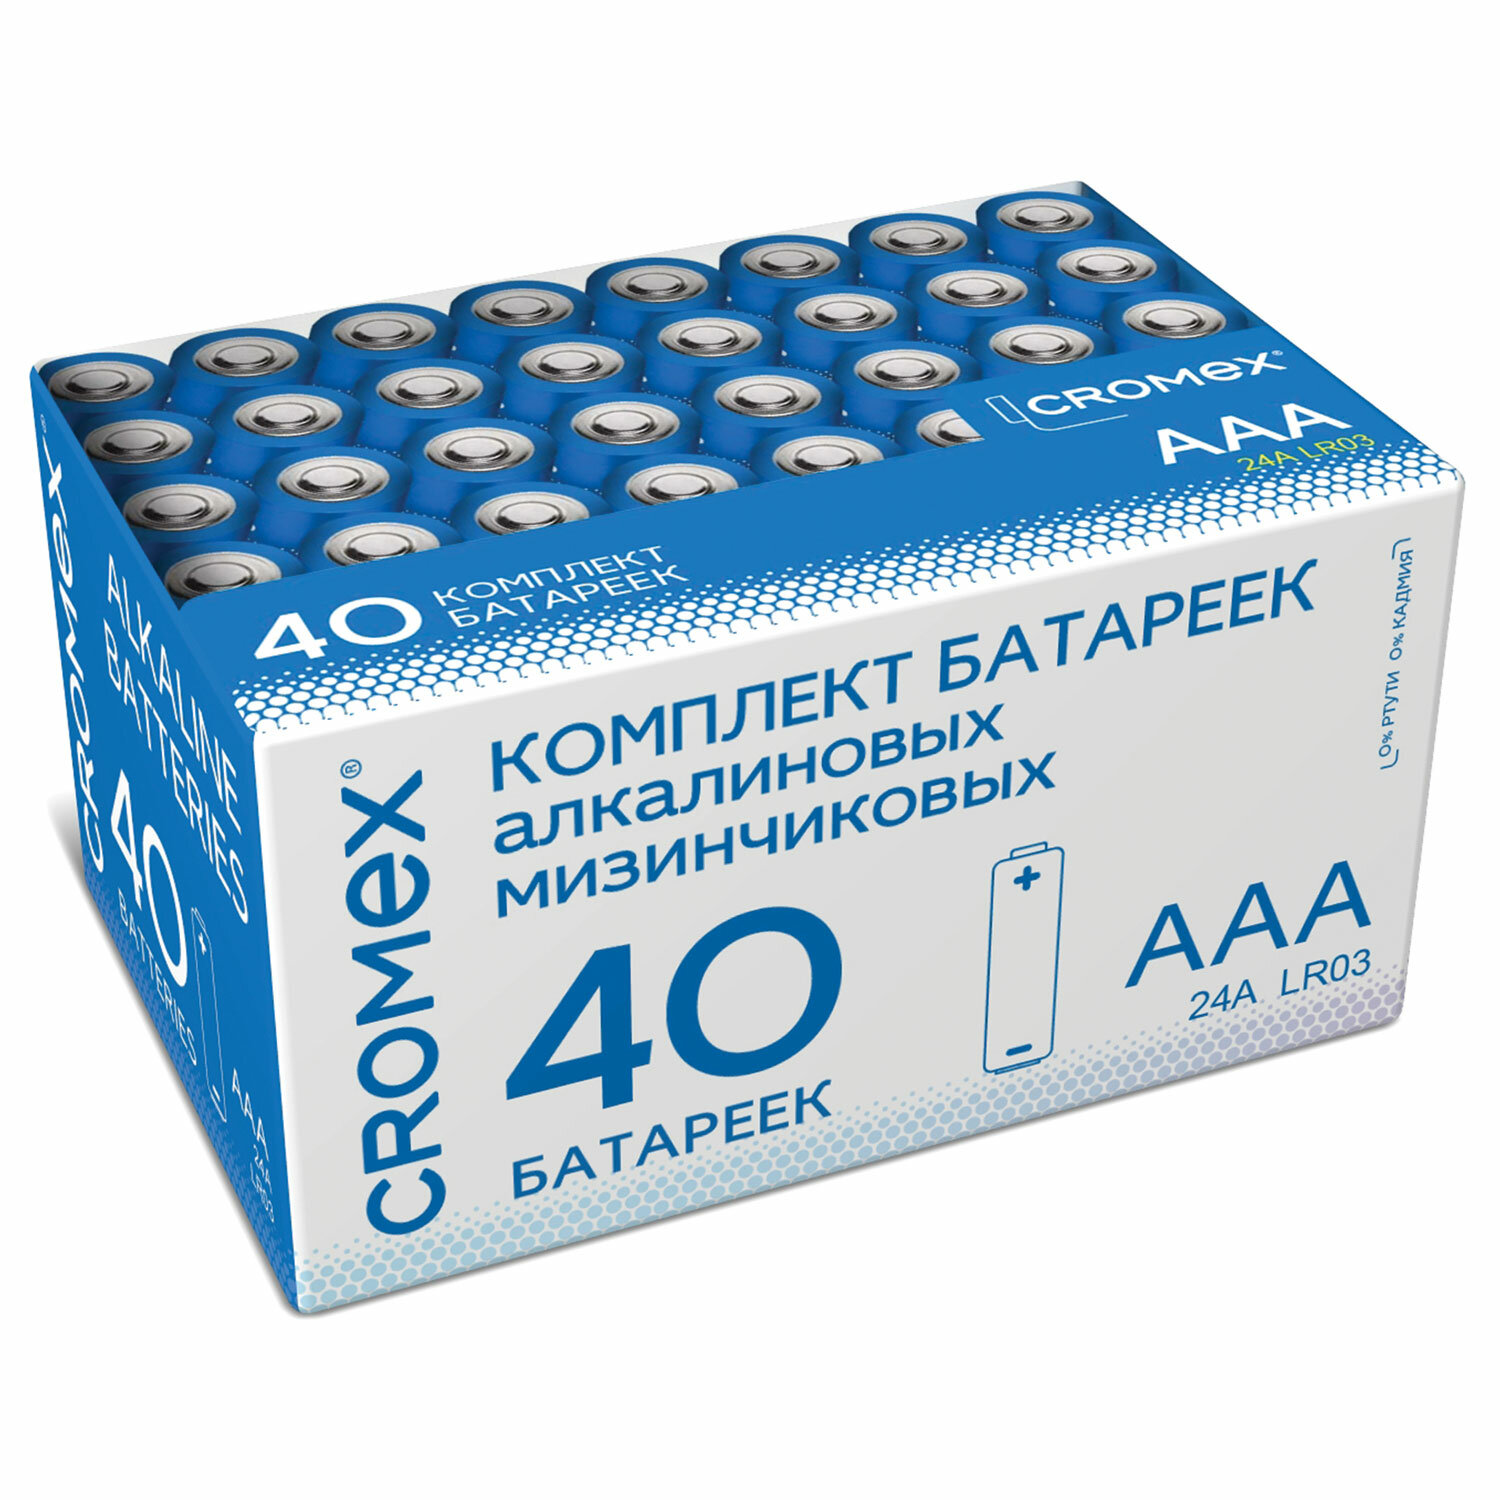 Батарея CROMEX Alkaline, AAA (LR03/24А), 1.5V, 40шт. (455596)